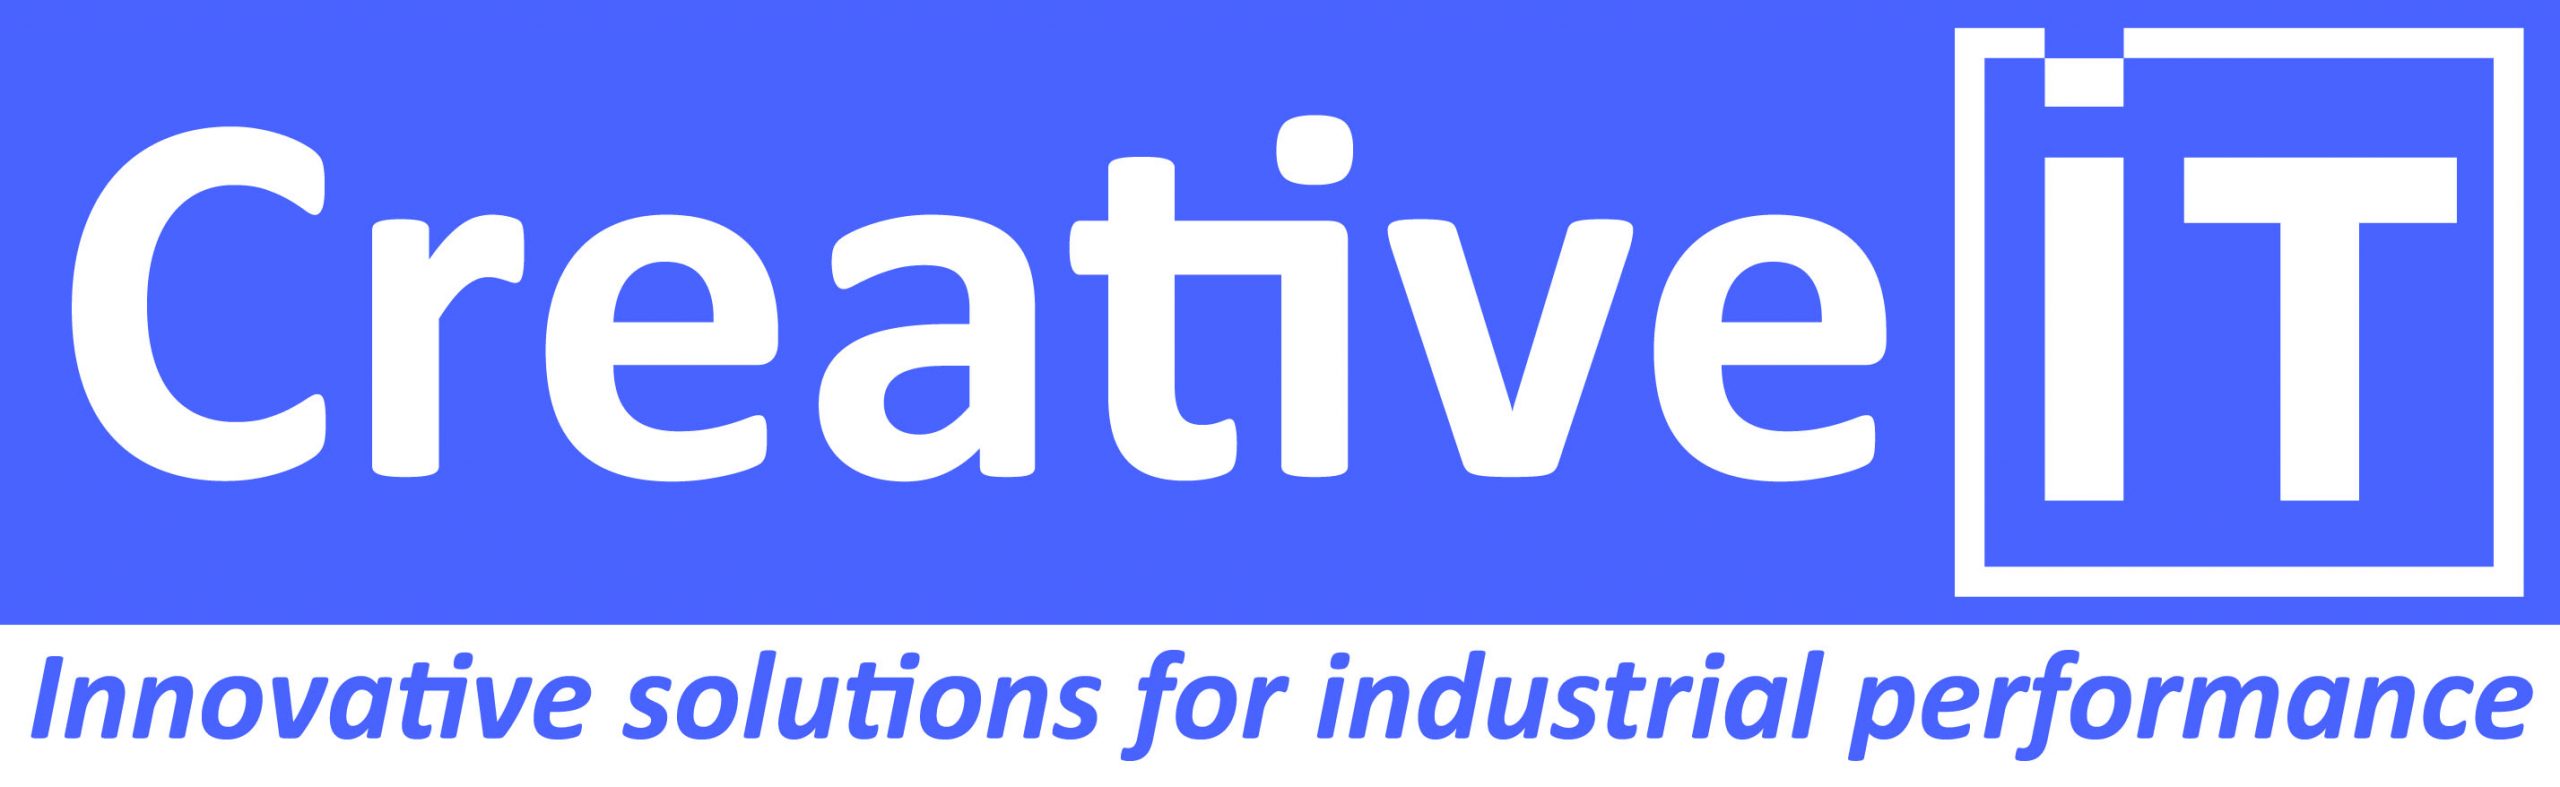 CreativeIT-2020_RVB-FINAL-scaled